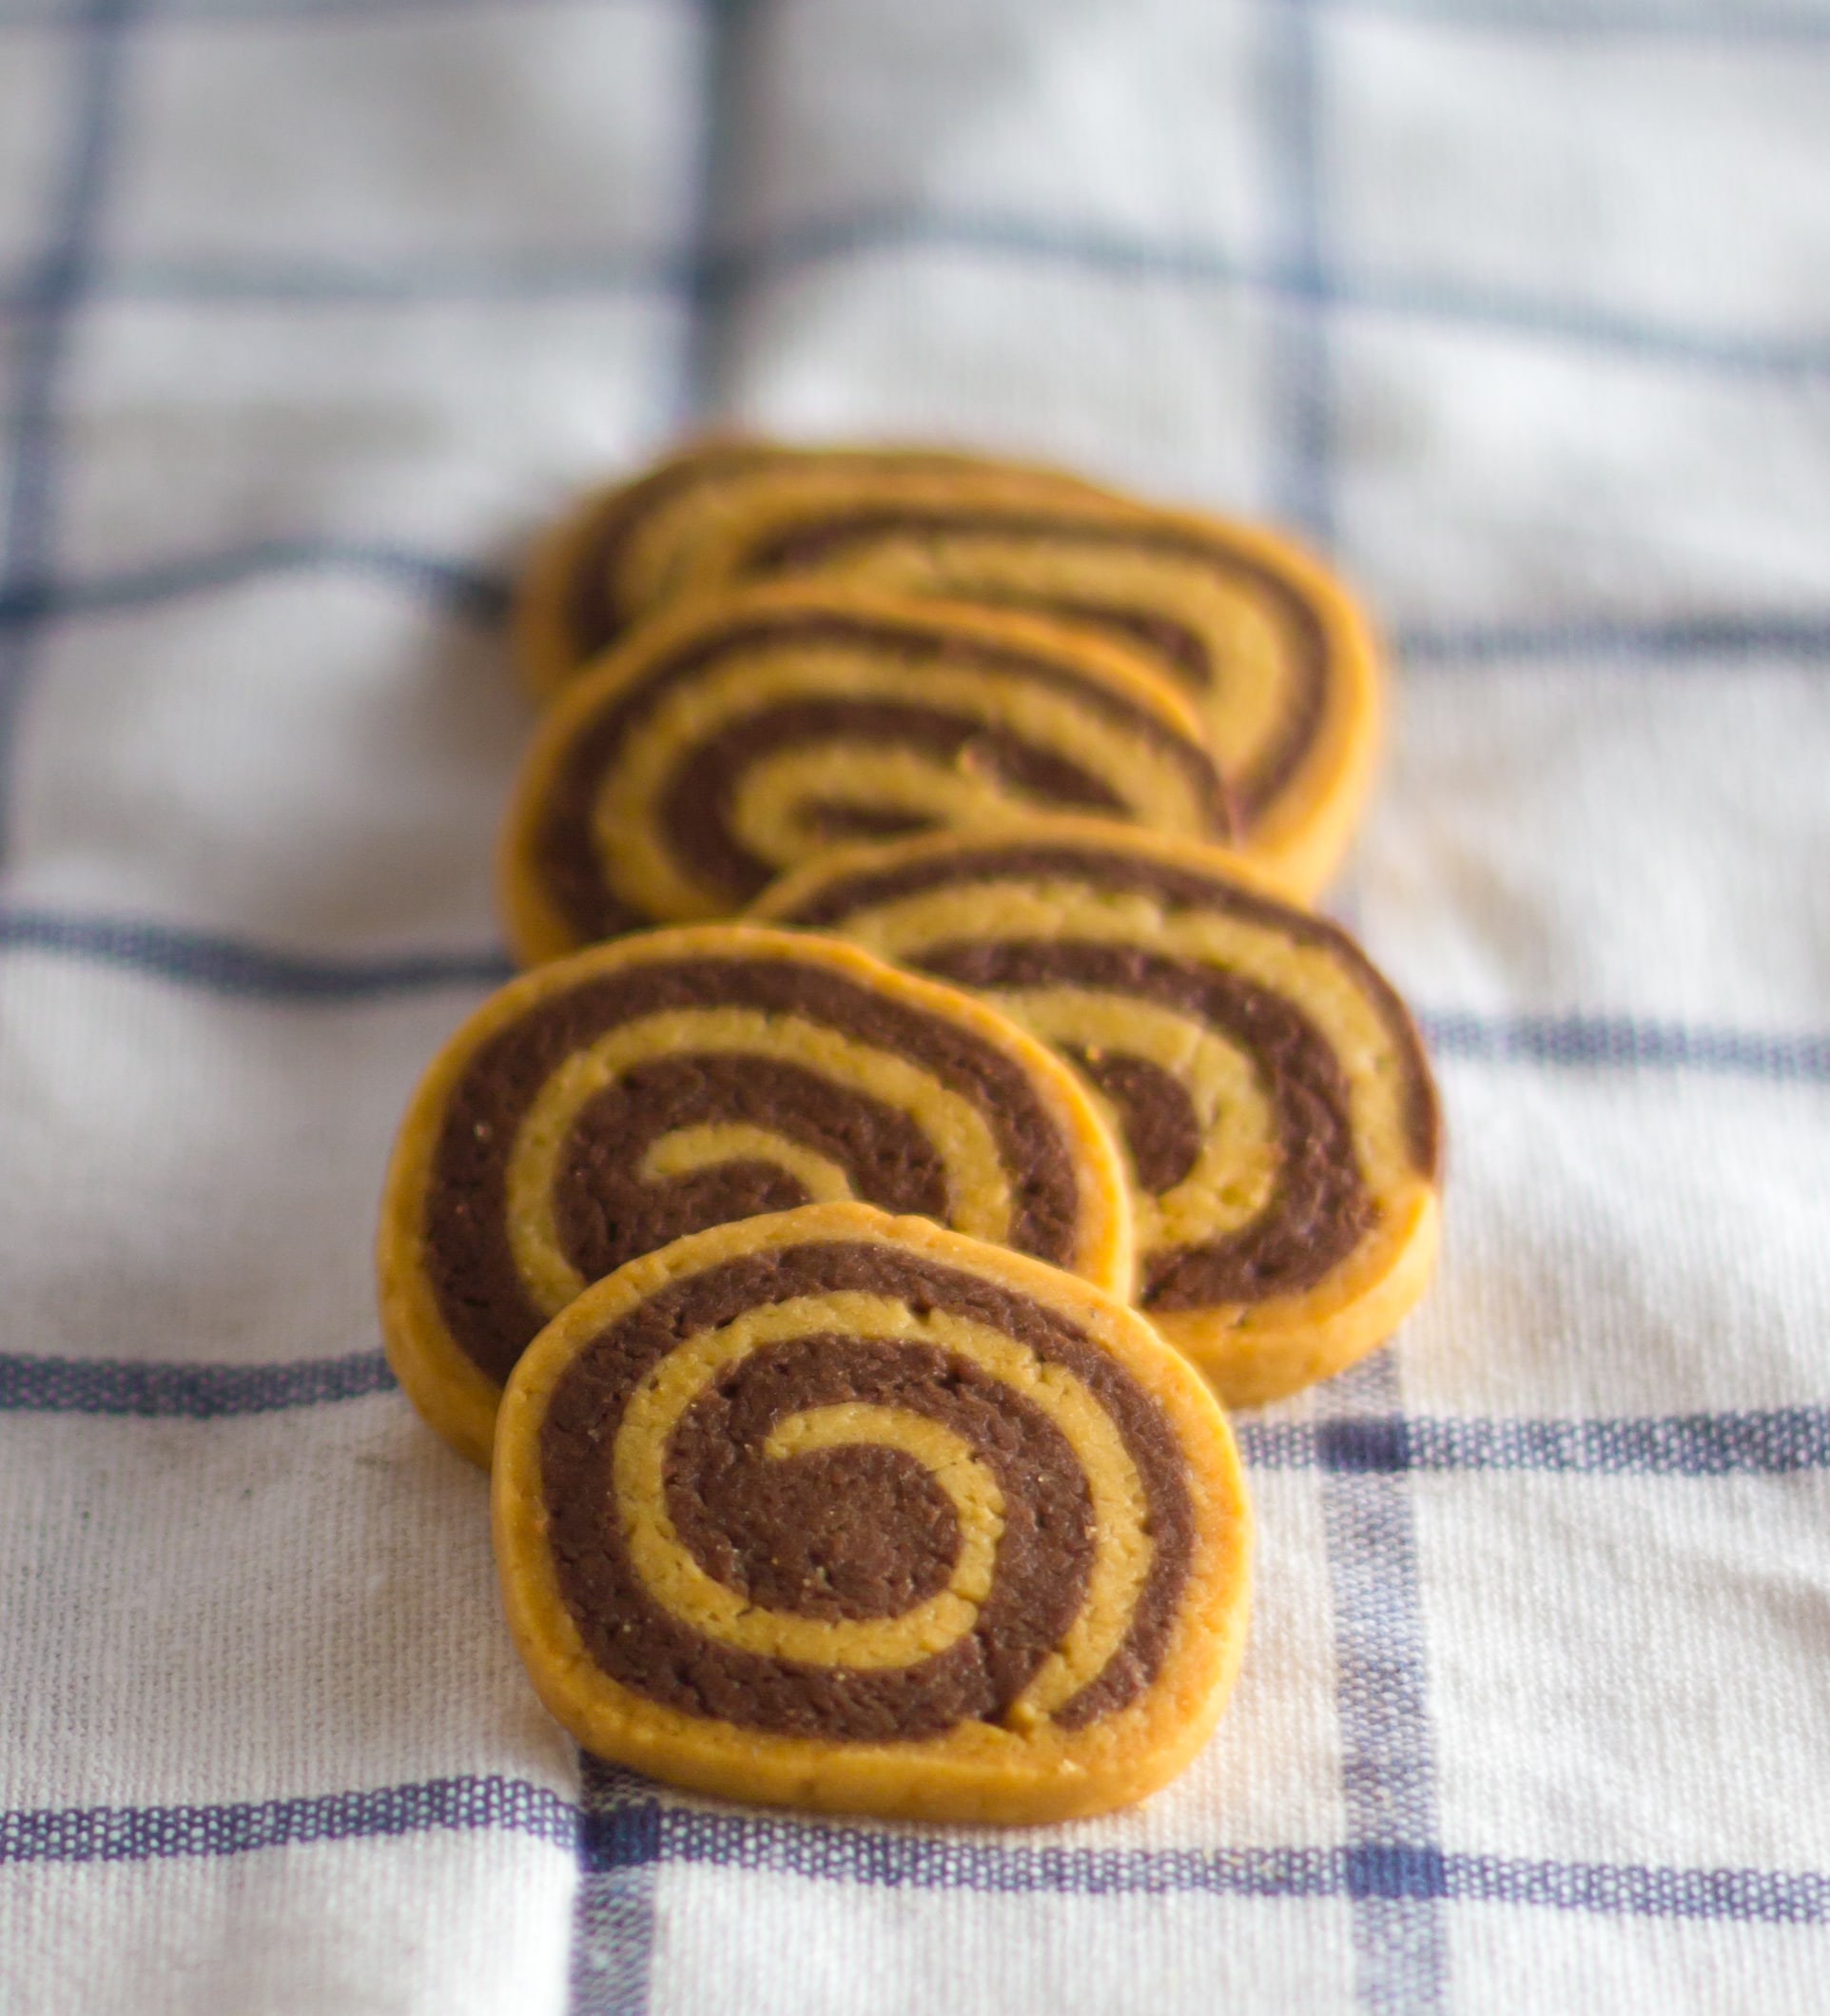 Trim Healthy Mama Chocolate Pinwheel Cookies THM:S